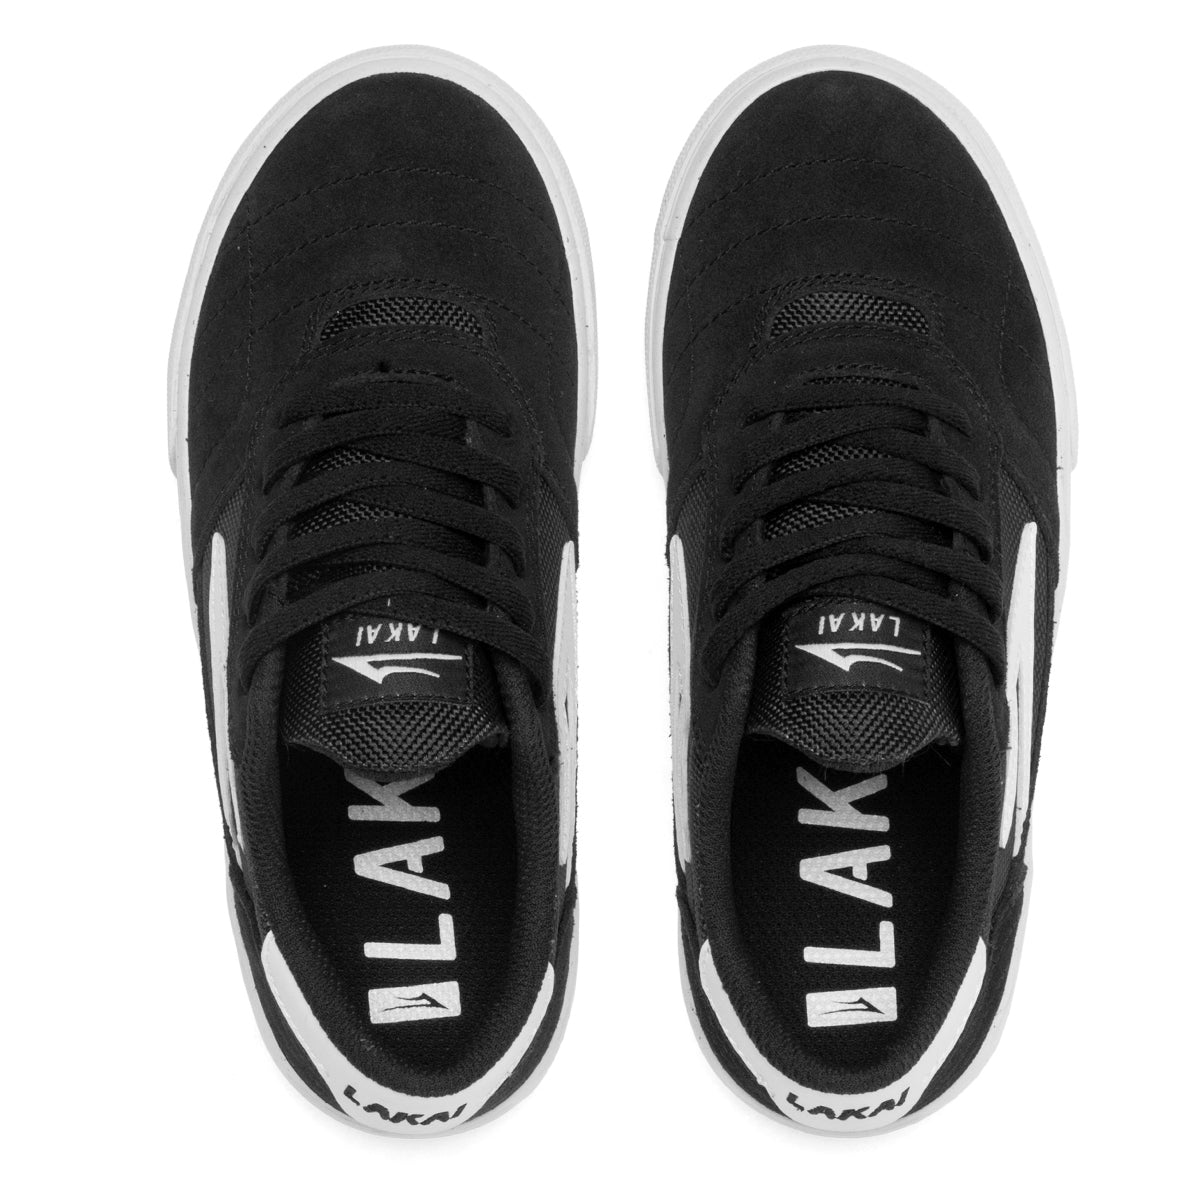 Lakai Cambridge Shoes - Black/White Suede